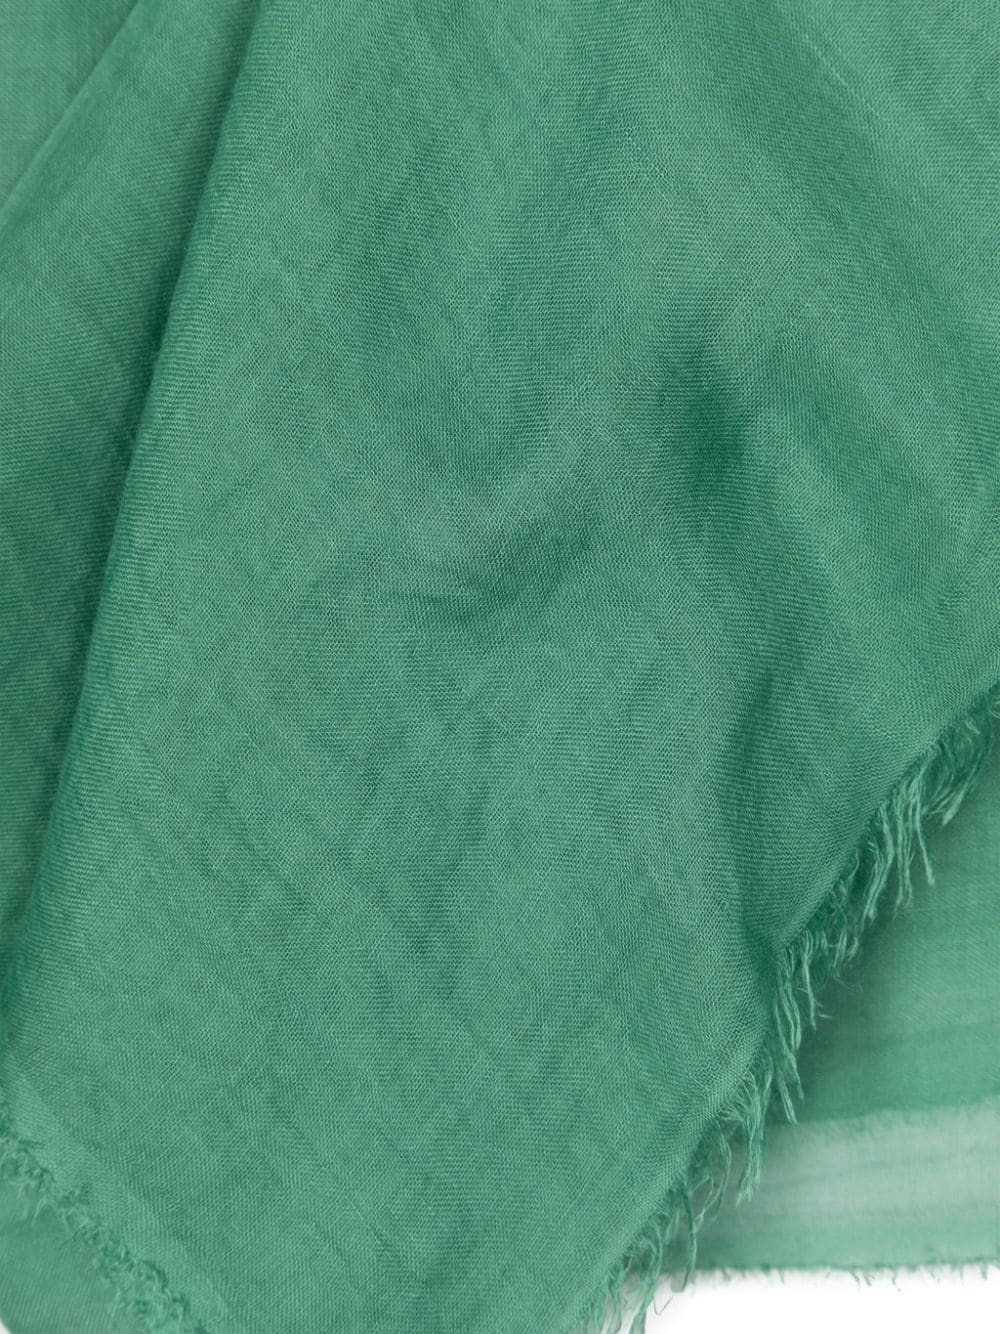 Faliero Sarti Tobia rechthoekige sjaal - Groen